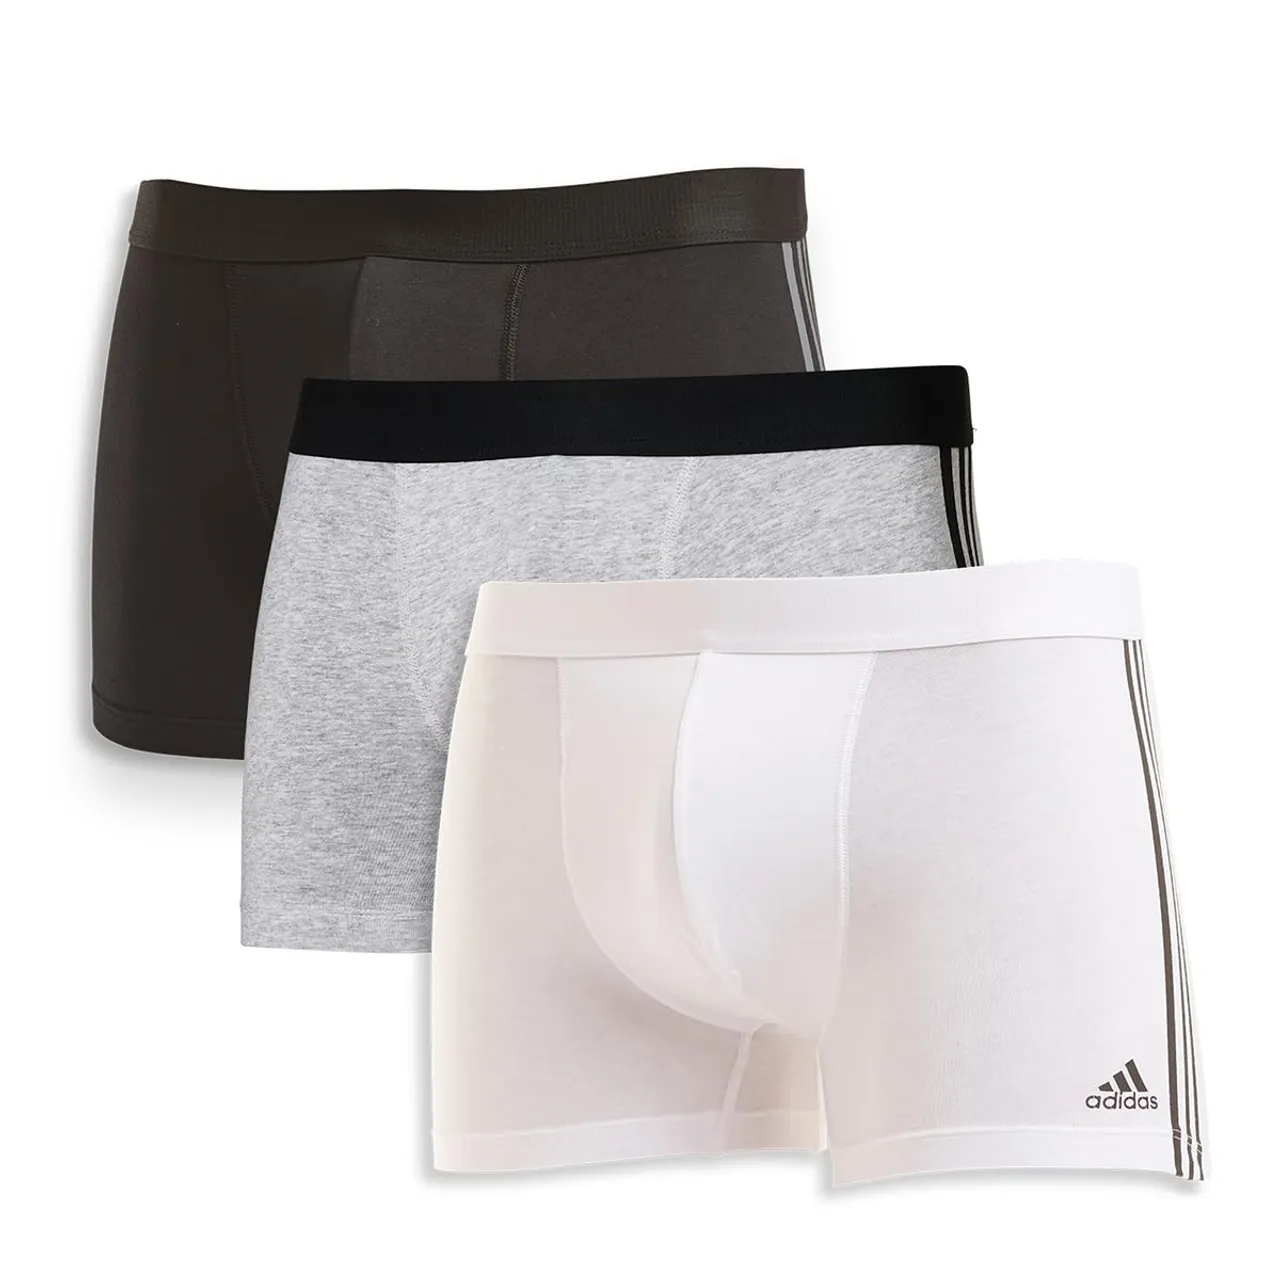 Adidas Boxershorts Herren (3er Pack) Unterhosen